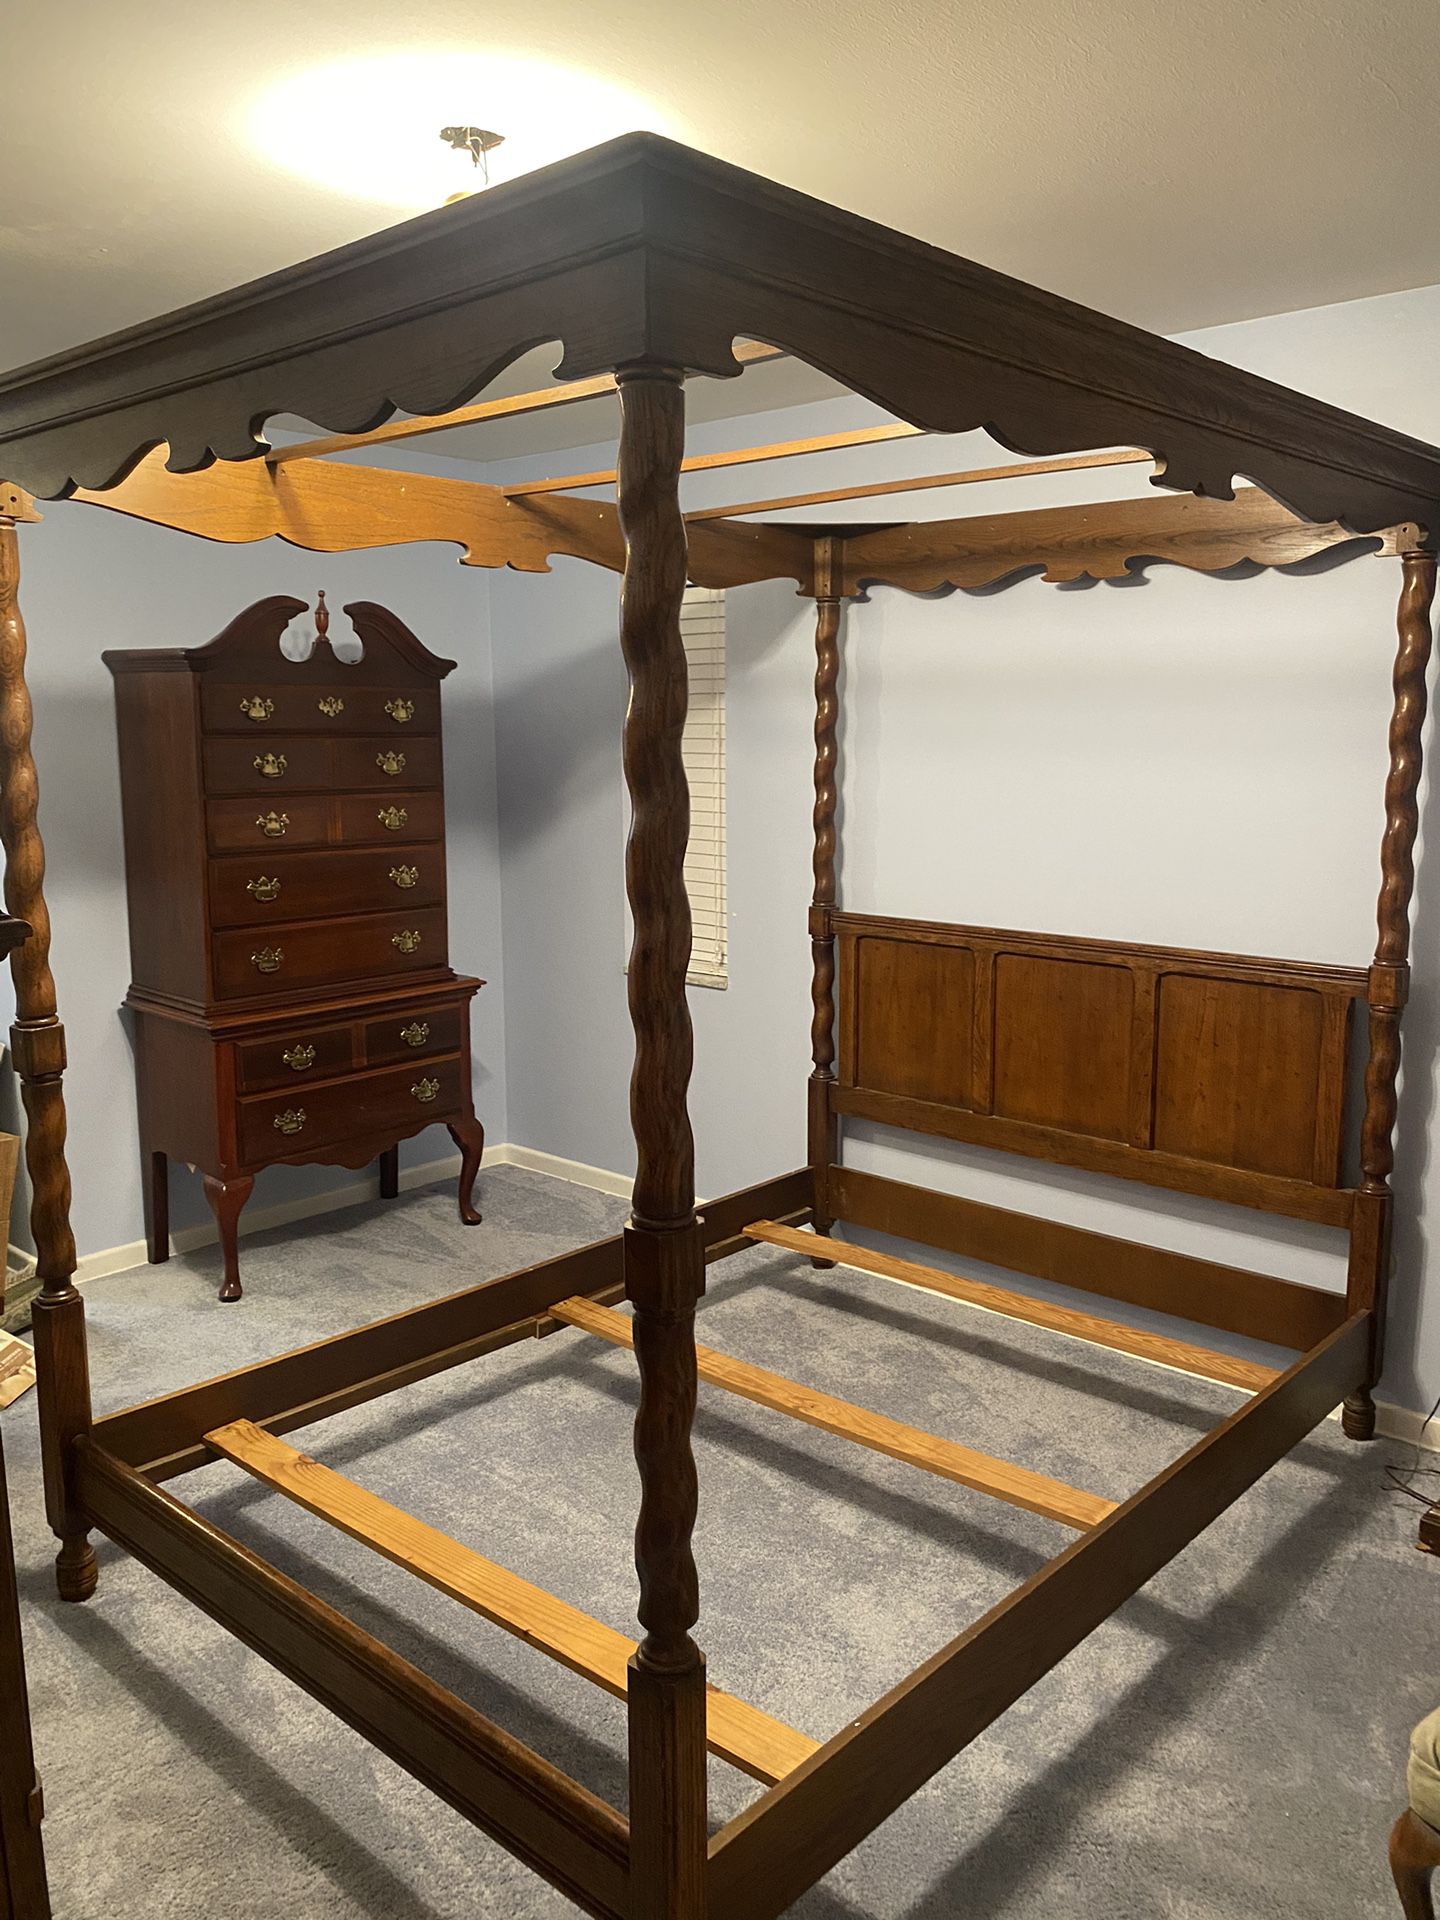 Vintage Drexel English Tudor 4 Poster Canopy Bed, Wardrobe, Dresser w/Mirrors, Night Stand